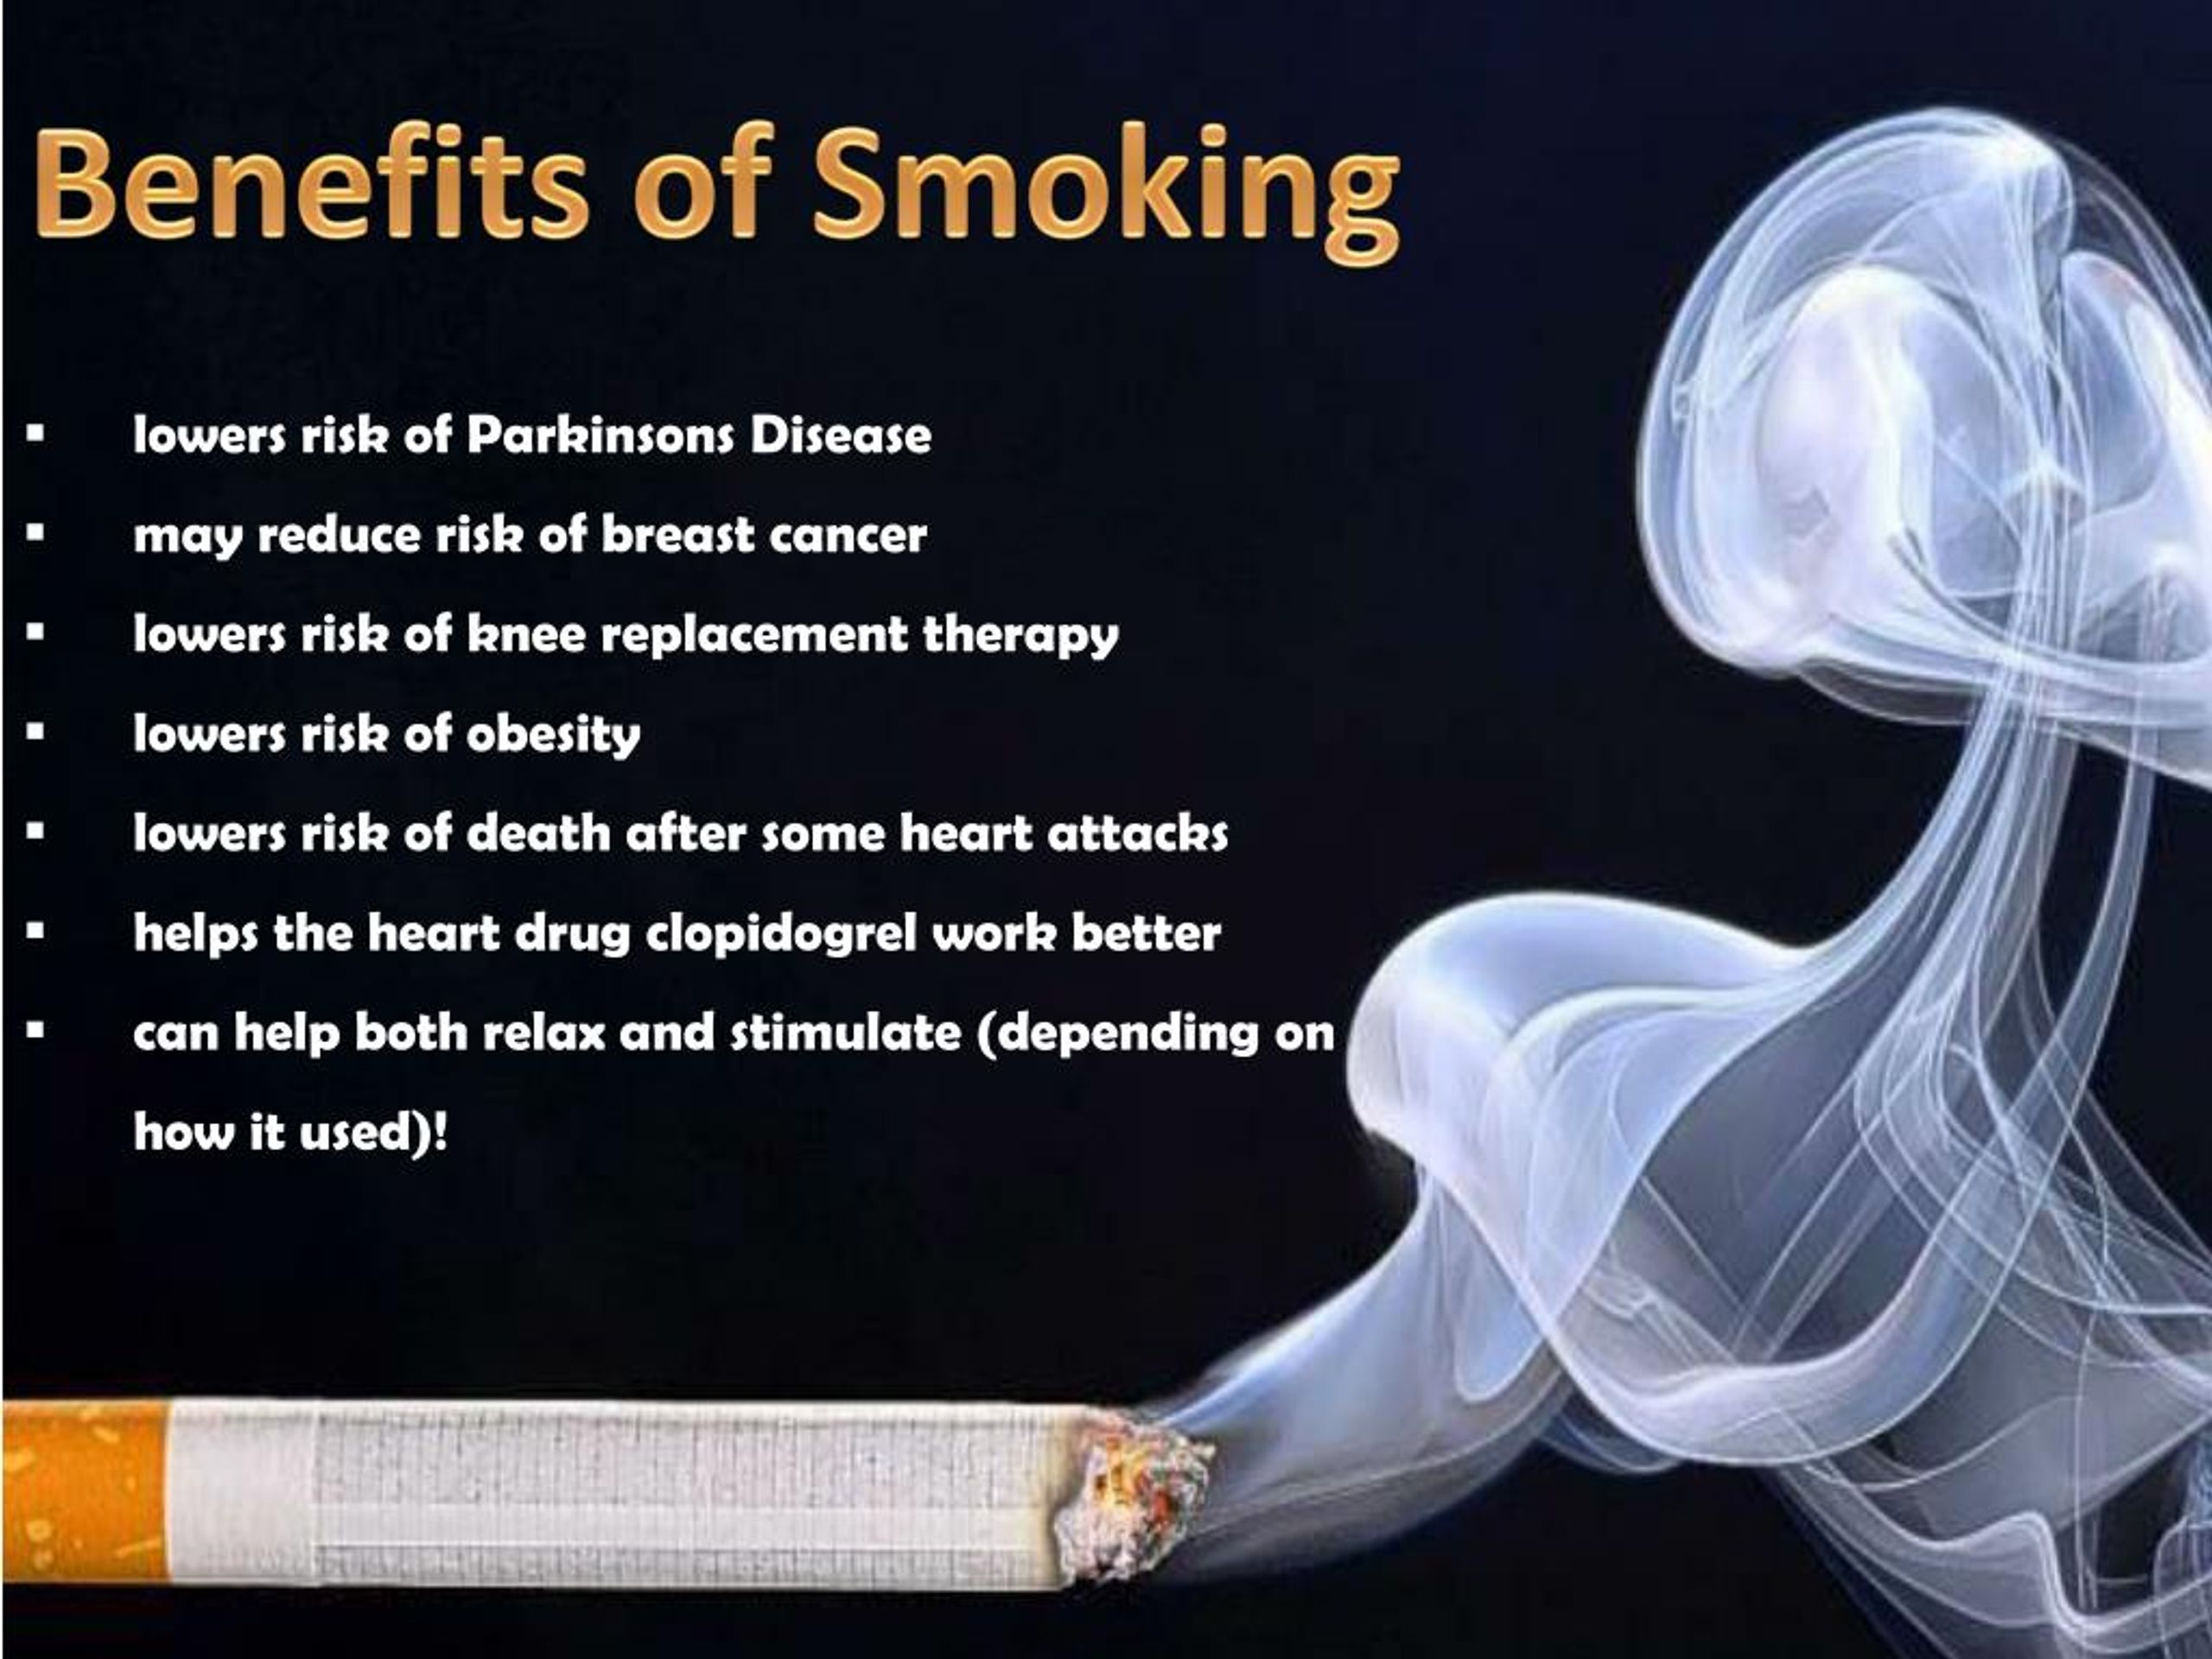 a presentation about smoking